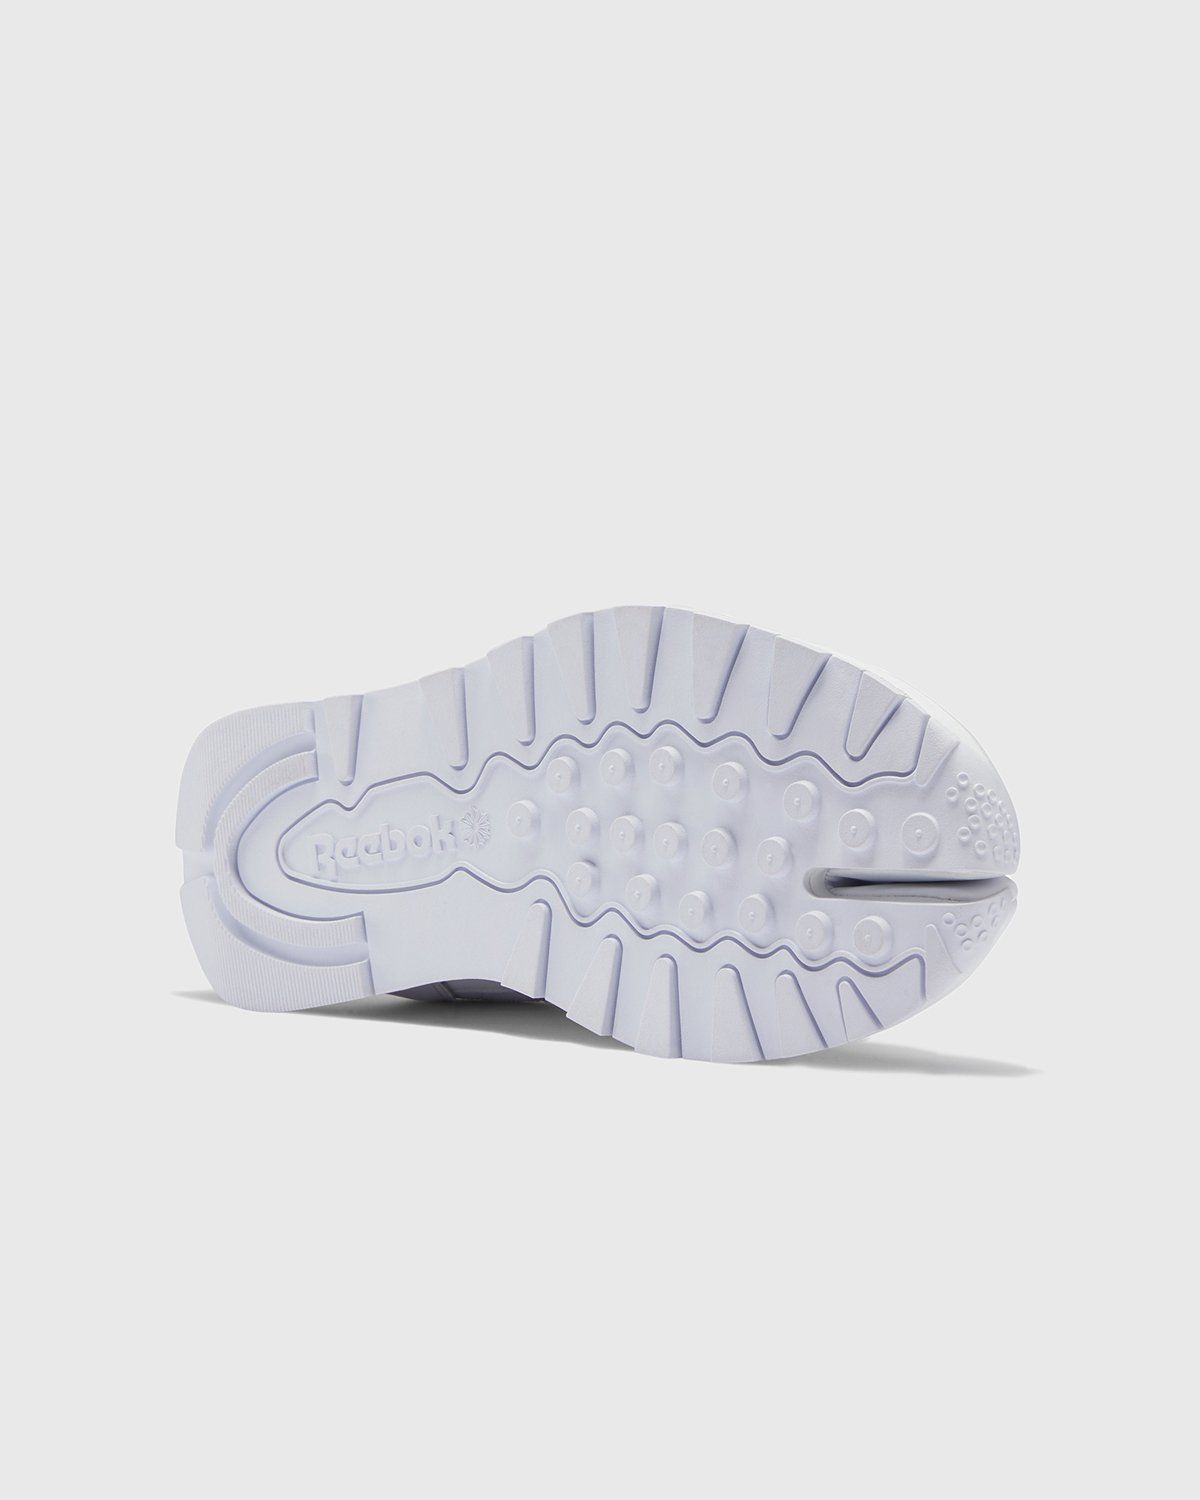 Maison Margiela x Reebok – Classic Leather Tabi White - Low Top Sneakers - White - Image 8